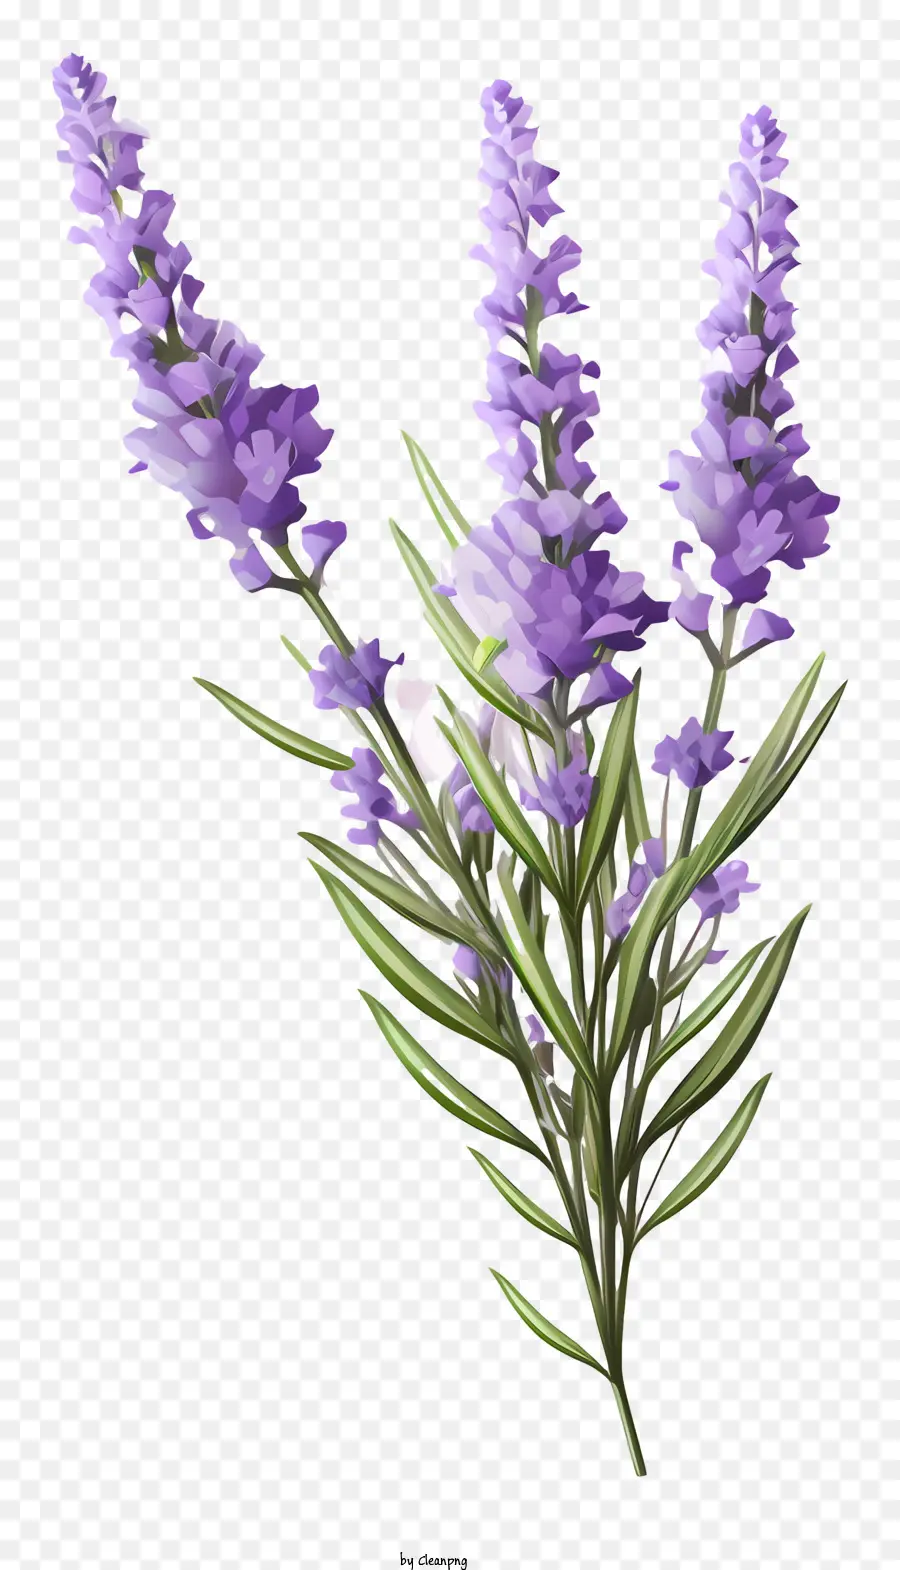 lavender flowers purple flowers long stems slender stems small green leaves